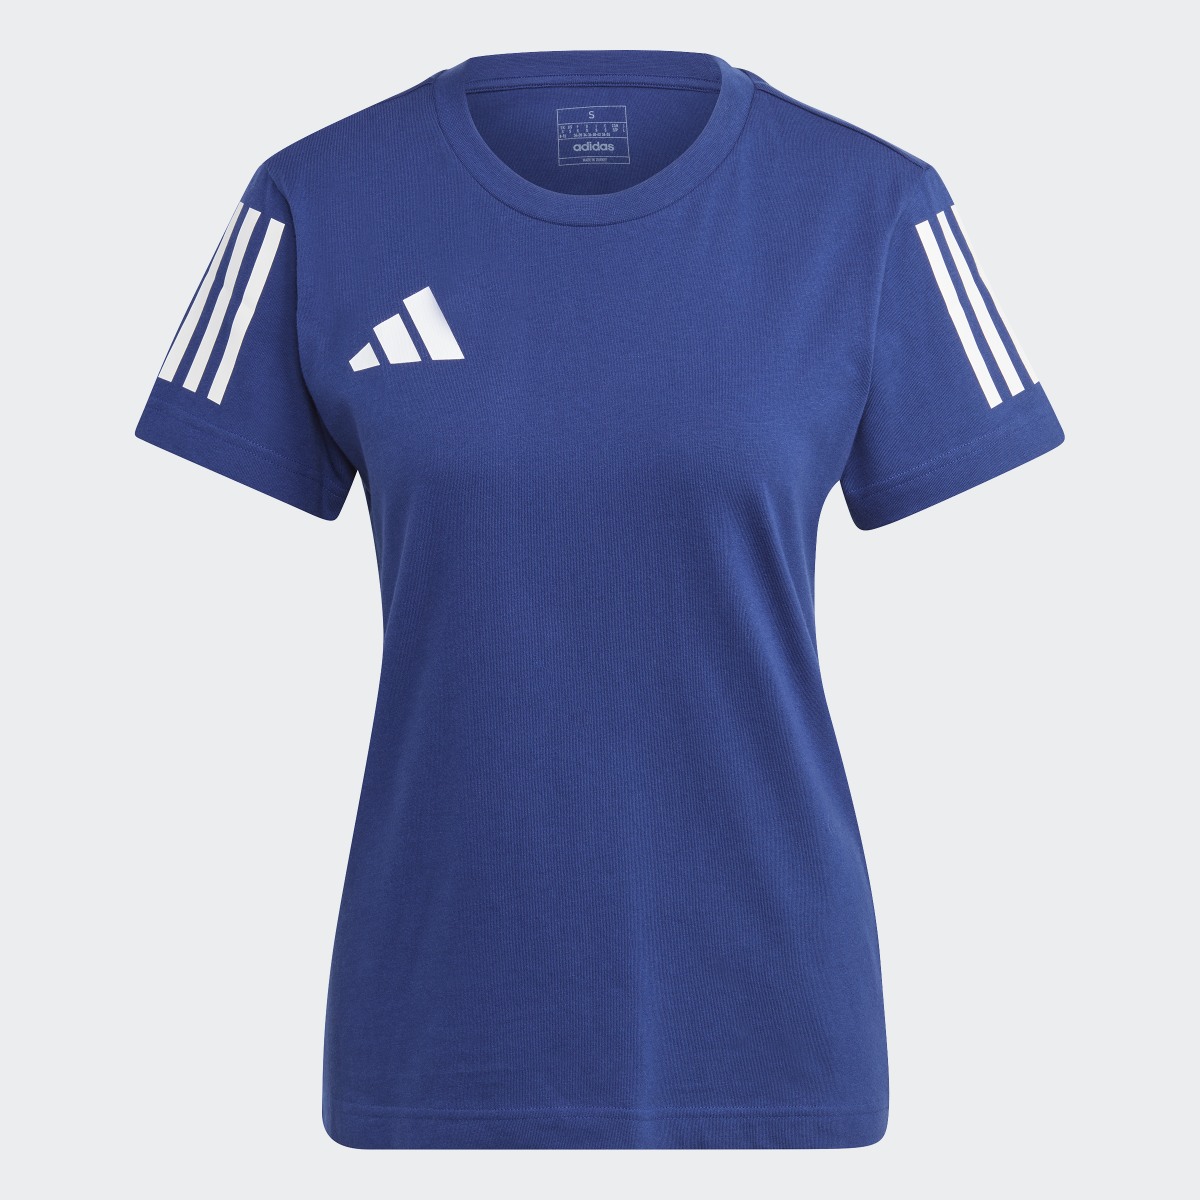 Adidas France Cotton Graphic T-Shirt. 5